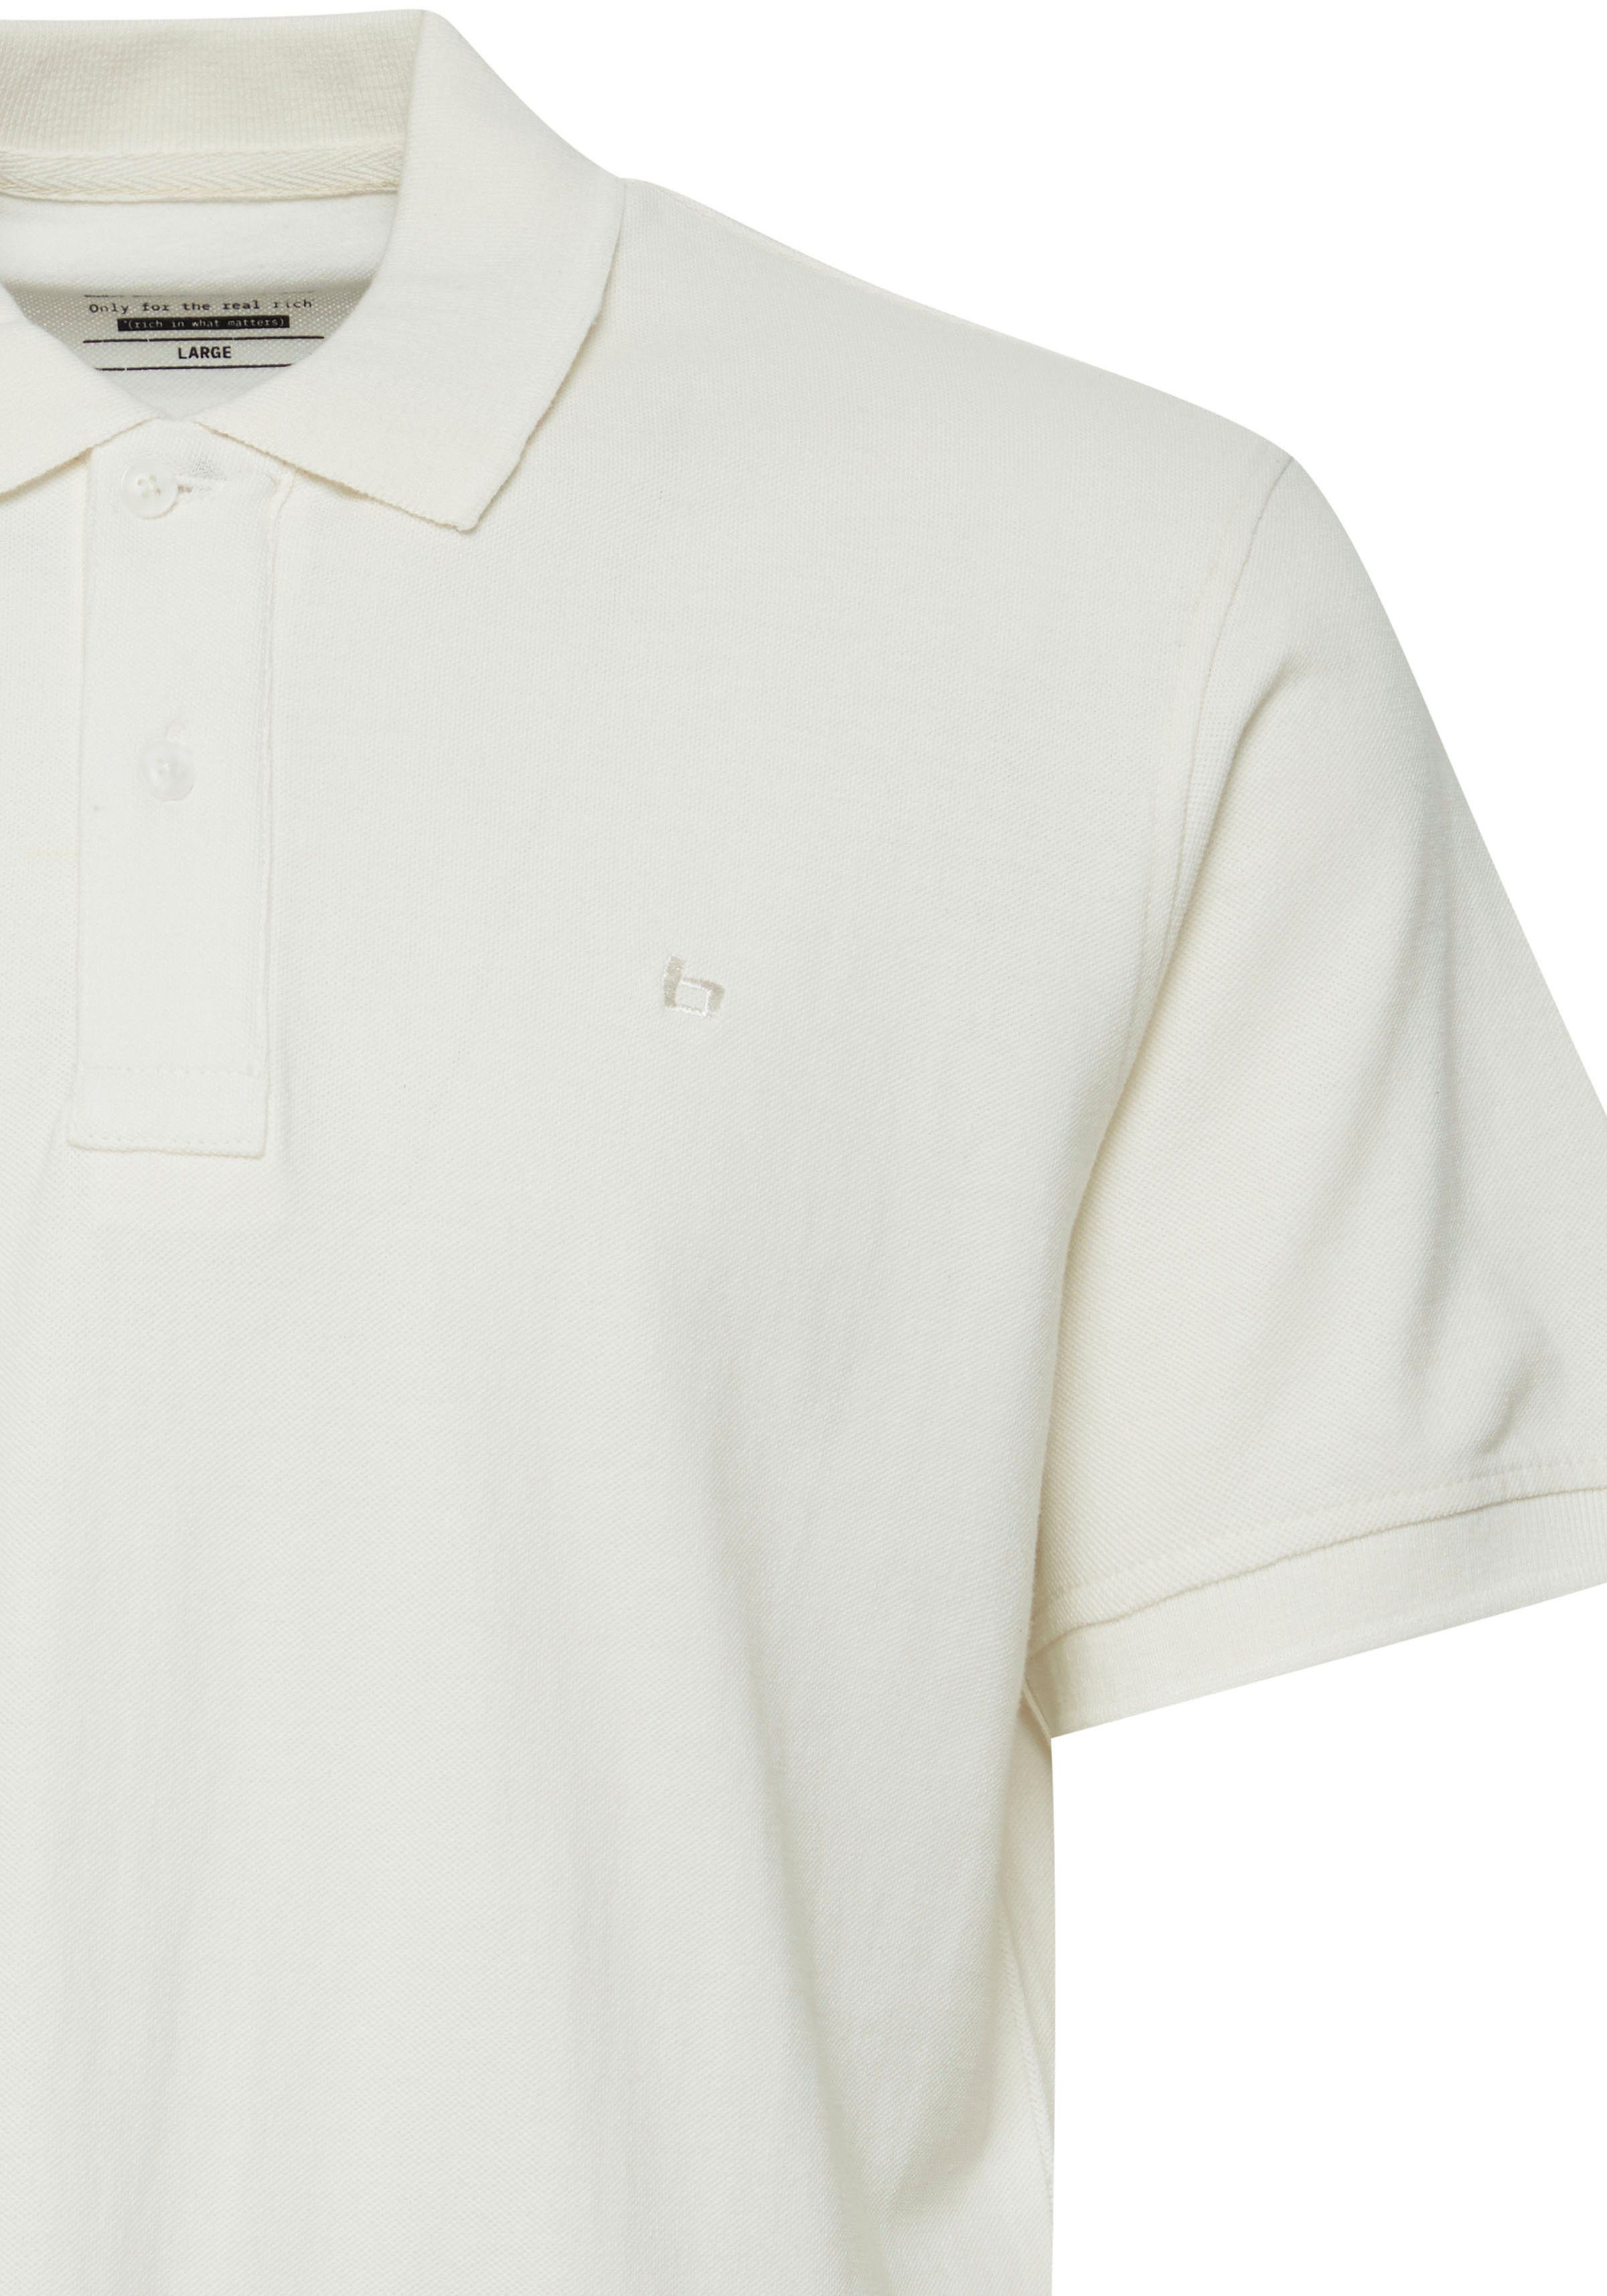 BL-Poloshirt white Poloshirt Blend